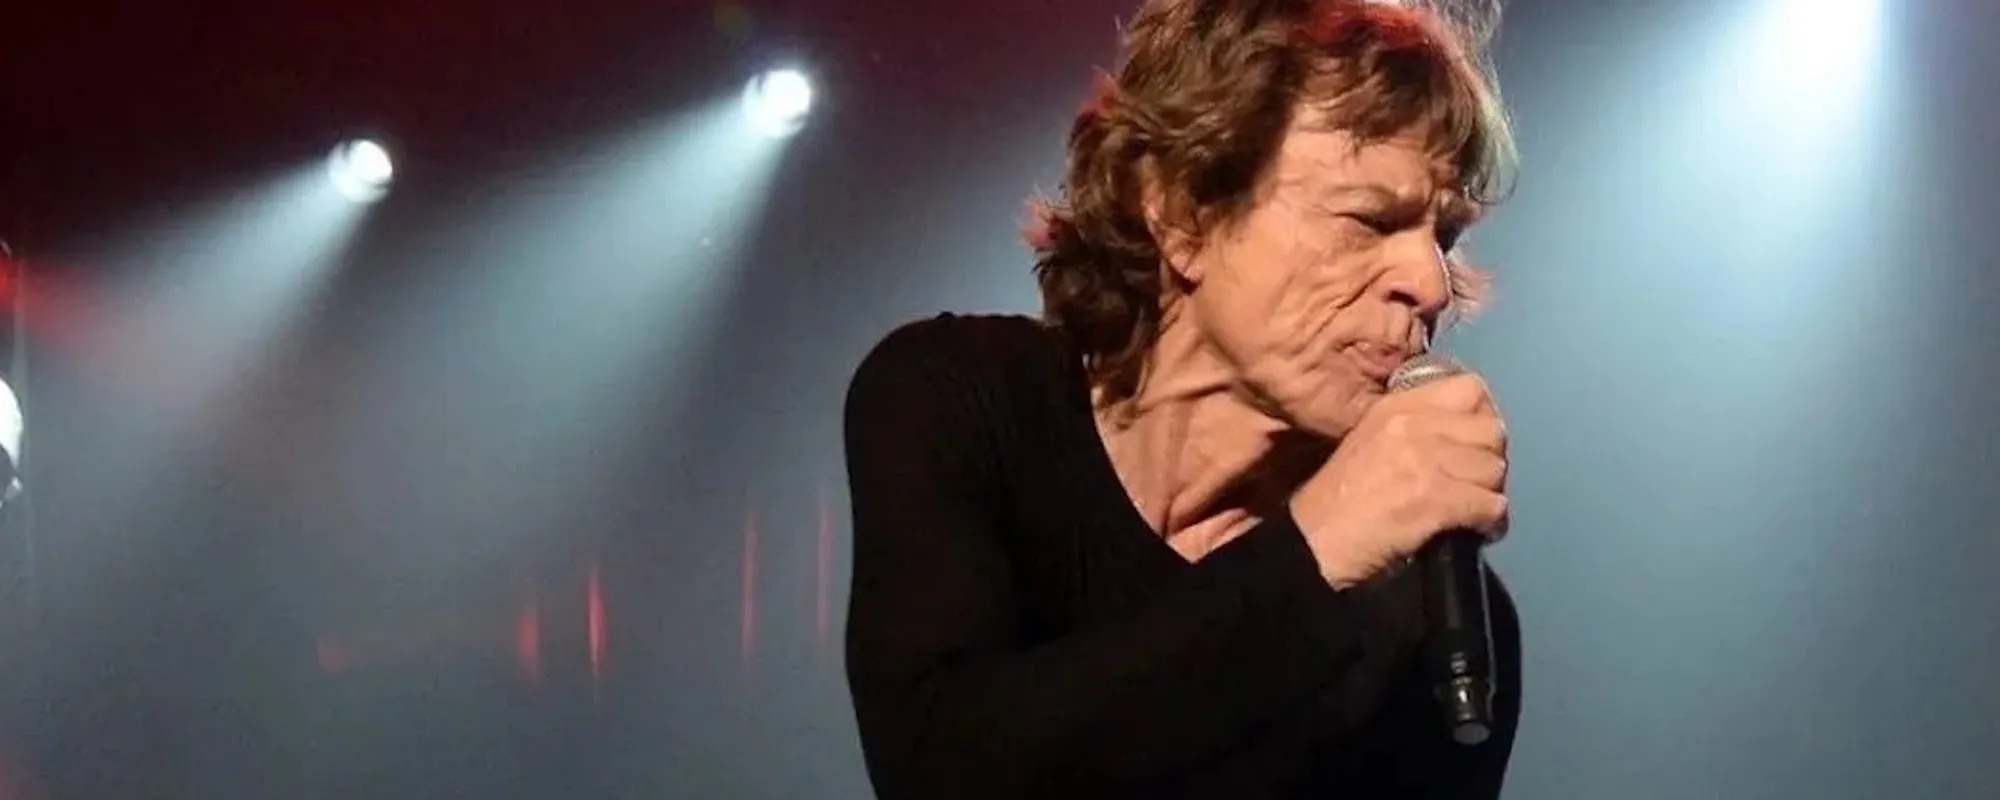 Mick Jagger Releases New Song “Strange Game” for Gary Oldman Series